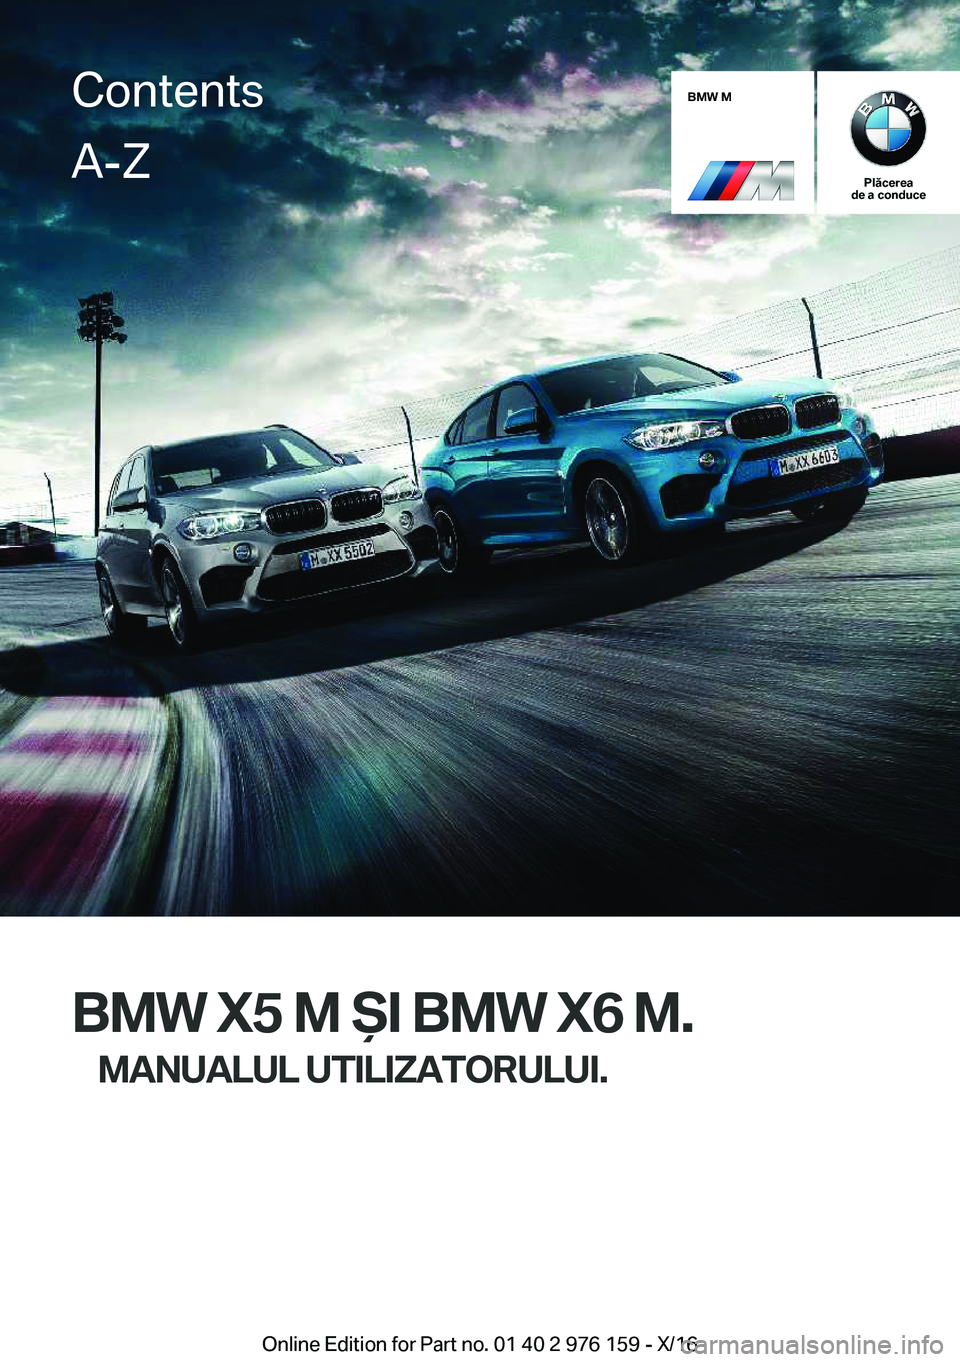 BMW X5 M 2017  Ghiduri De Utilizare (in Romanian) �B�M�W��M
�P�l�